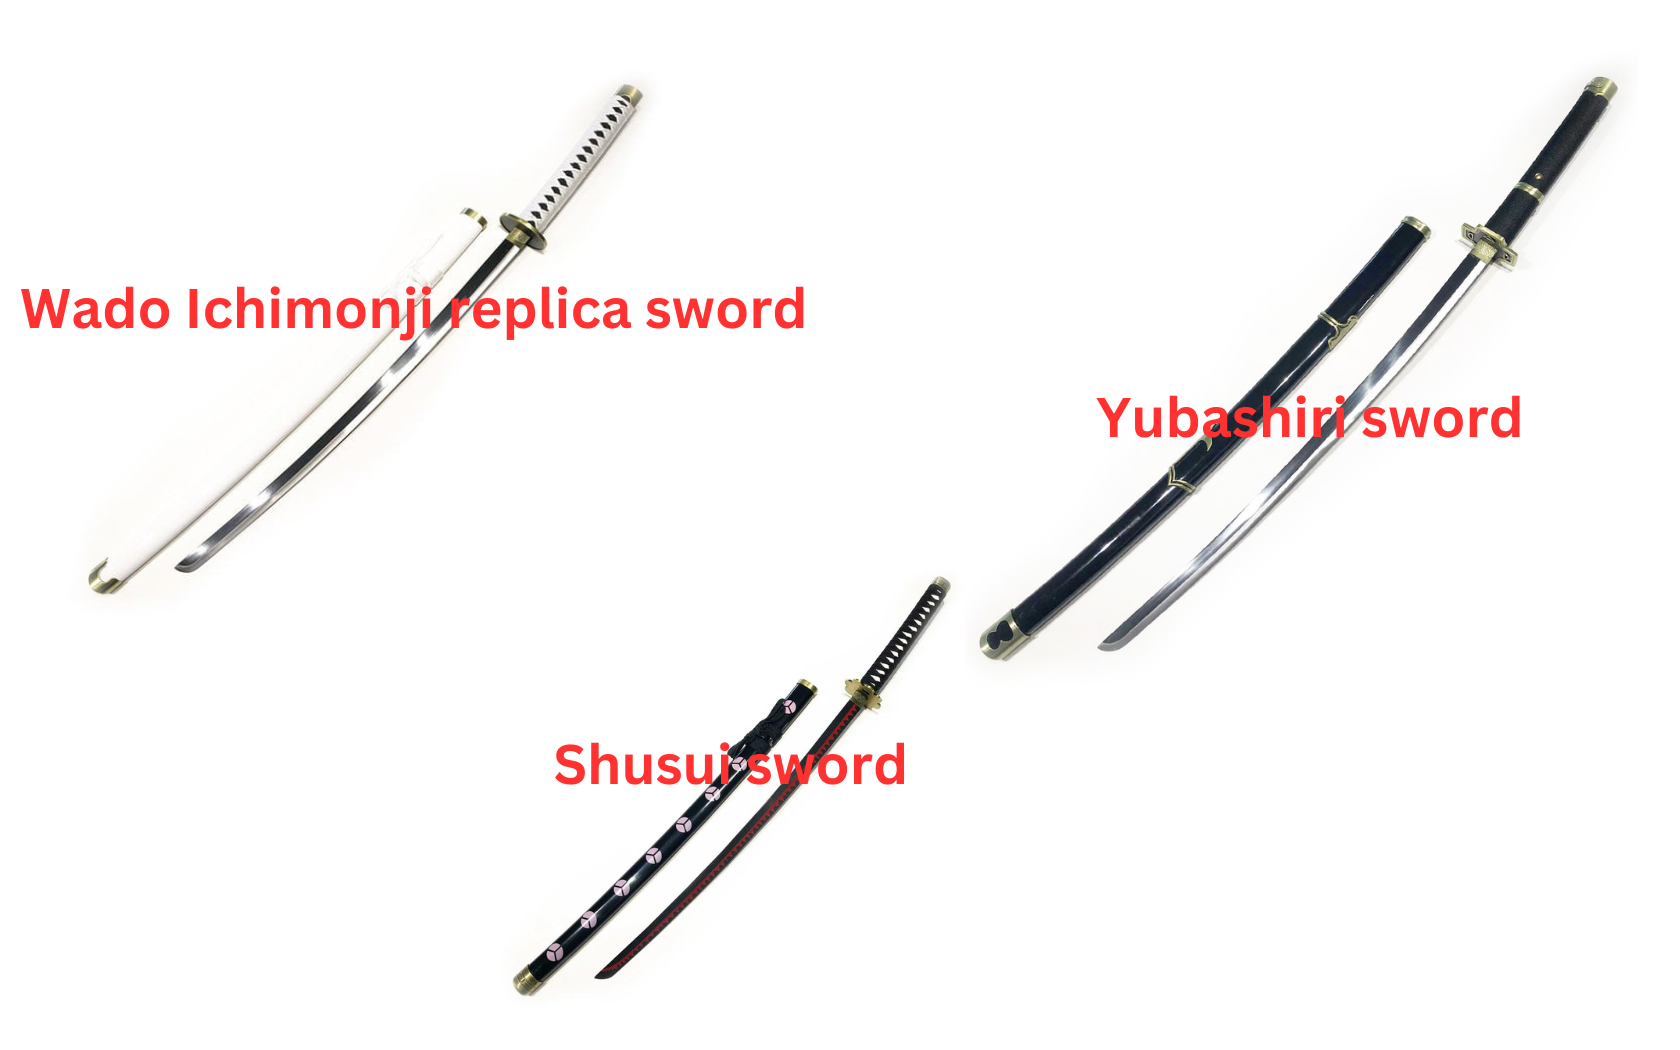 OtakuNinjaHero Limited Edition of Zoro Swords Officially Announced